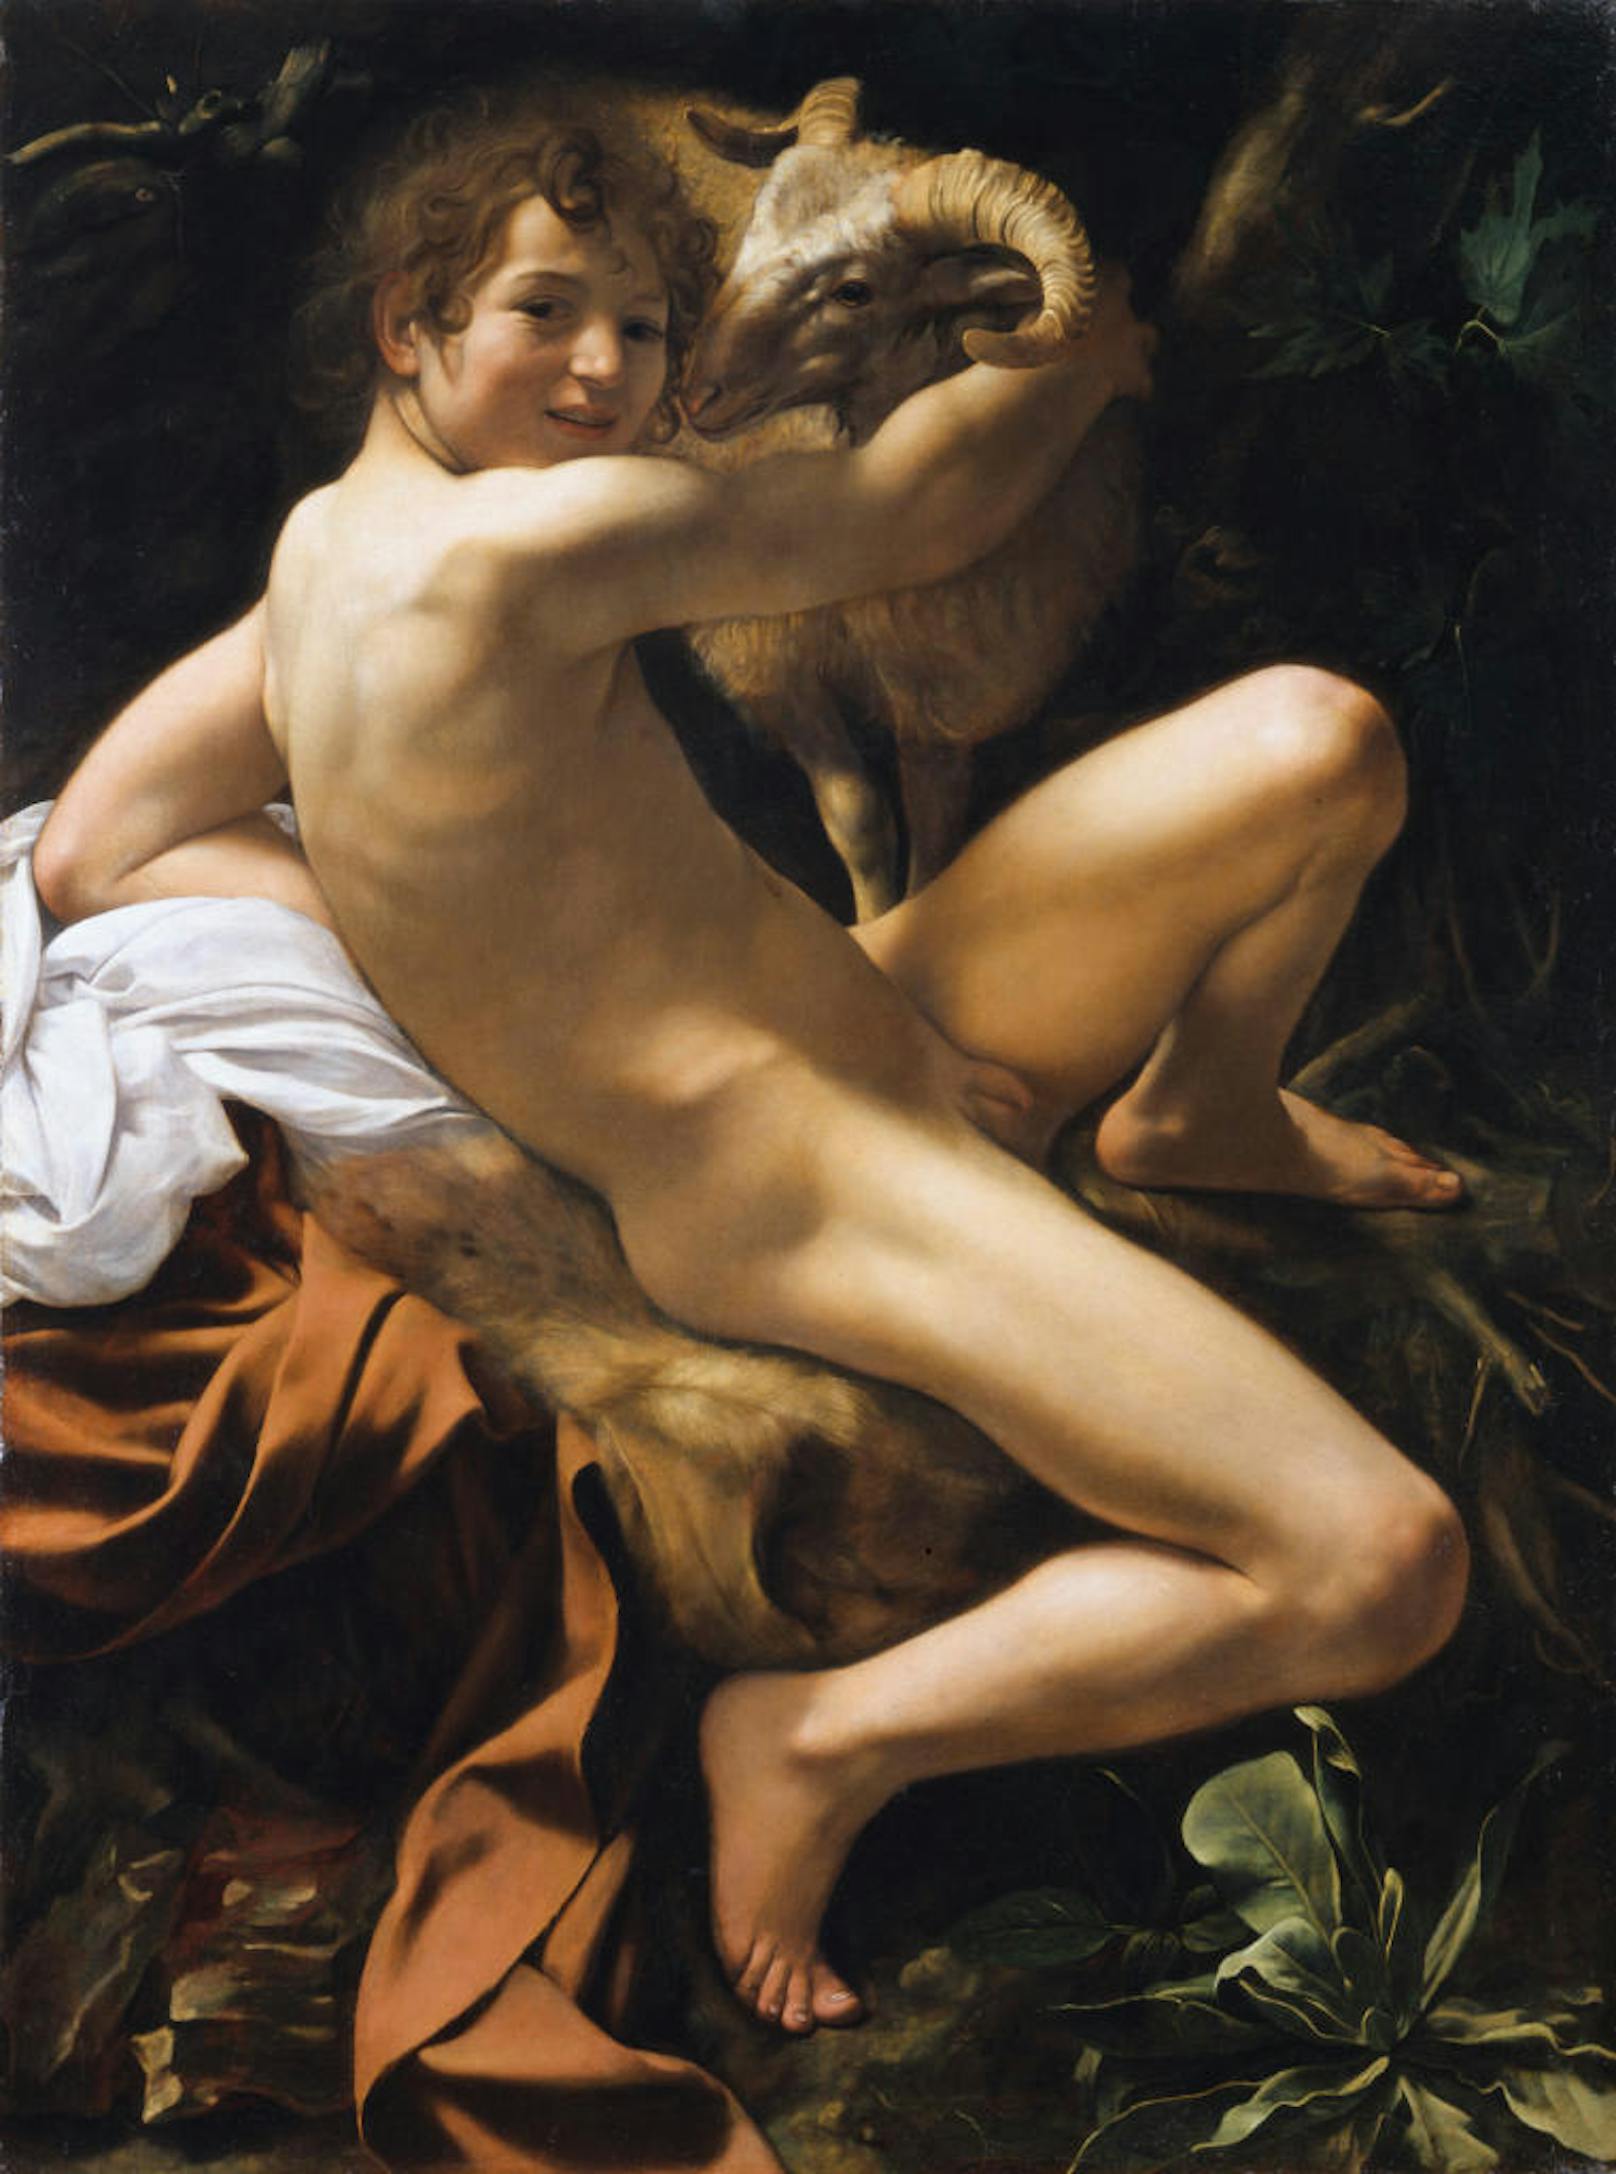 Michelangelo Merisi da Caravaggio (Mailand 1571-1610 Porto Ercole)
Hl. Johannes der Täufer
Um 1602
Leinwand, 129 × 95 cm
Rom, Musei Capitolini,